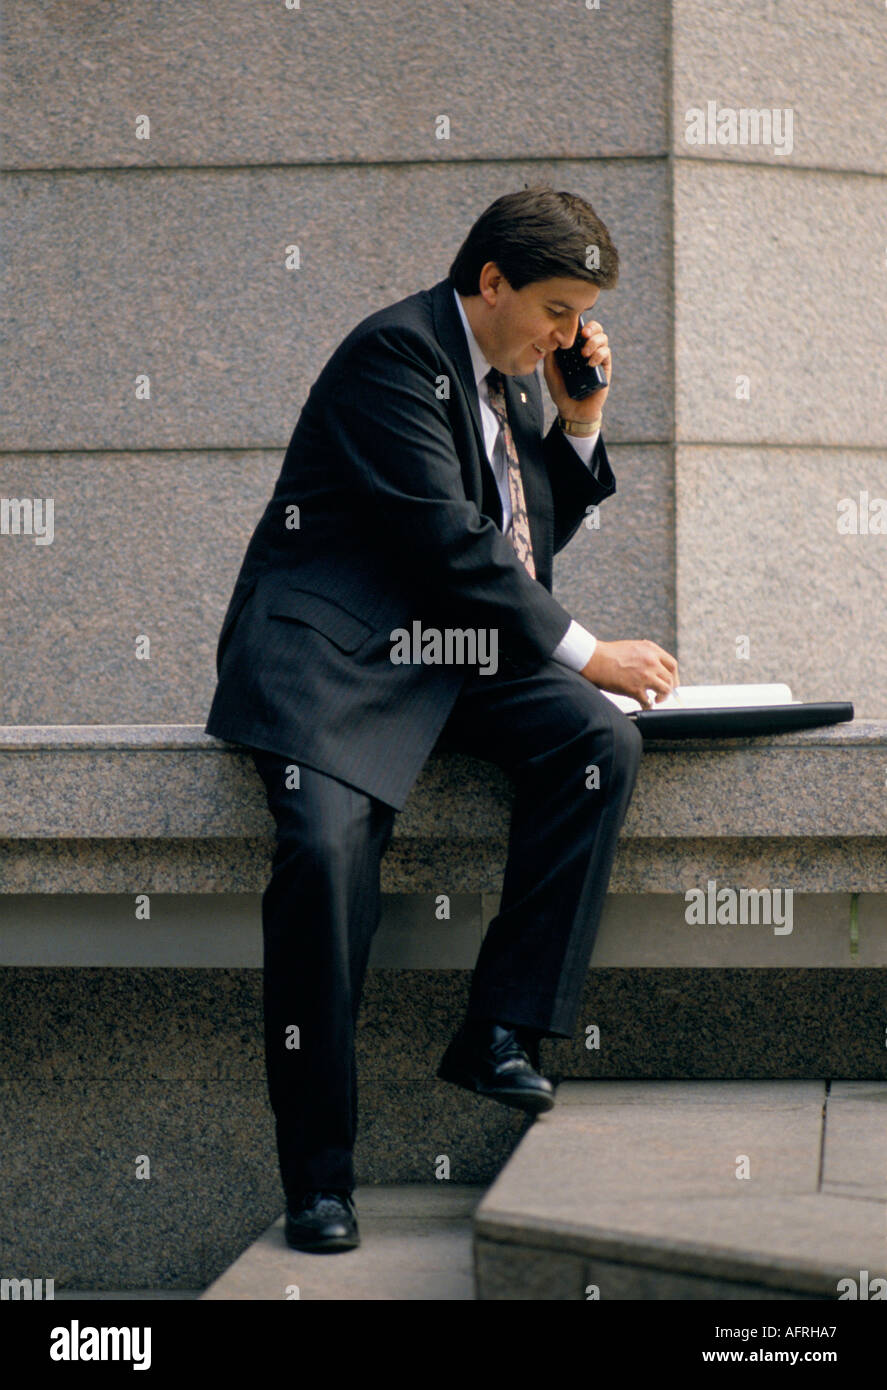 Man doing business on his mobile phone. City of London England. Circa 1995 1990s UK HOMER SYKES Stock Photo